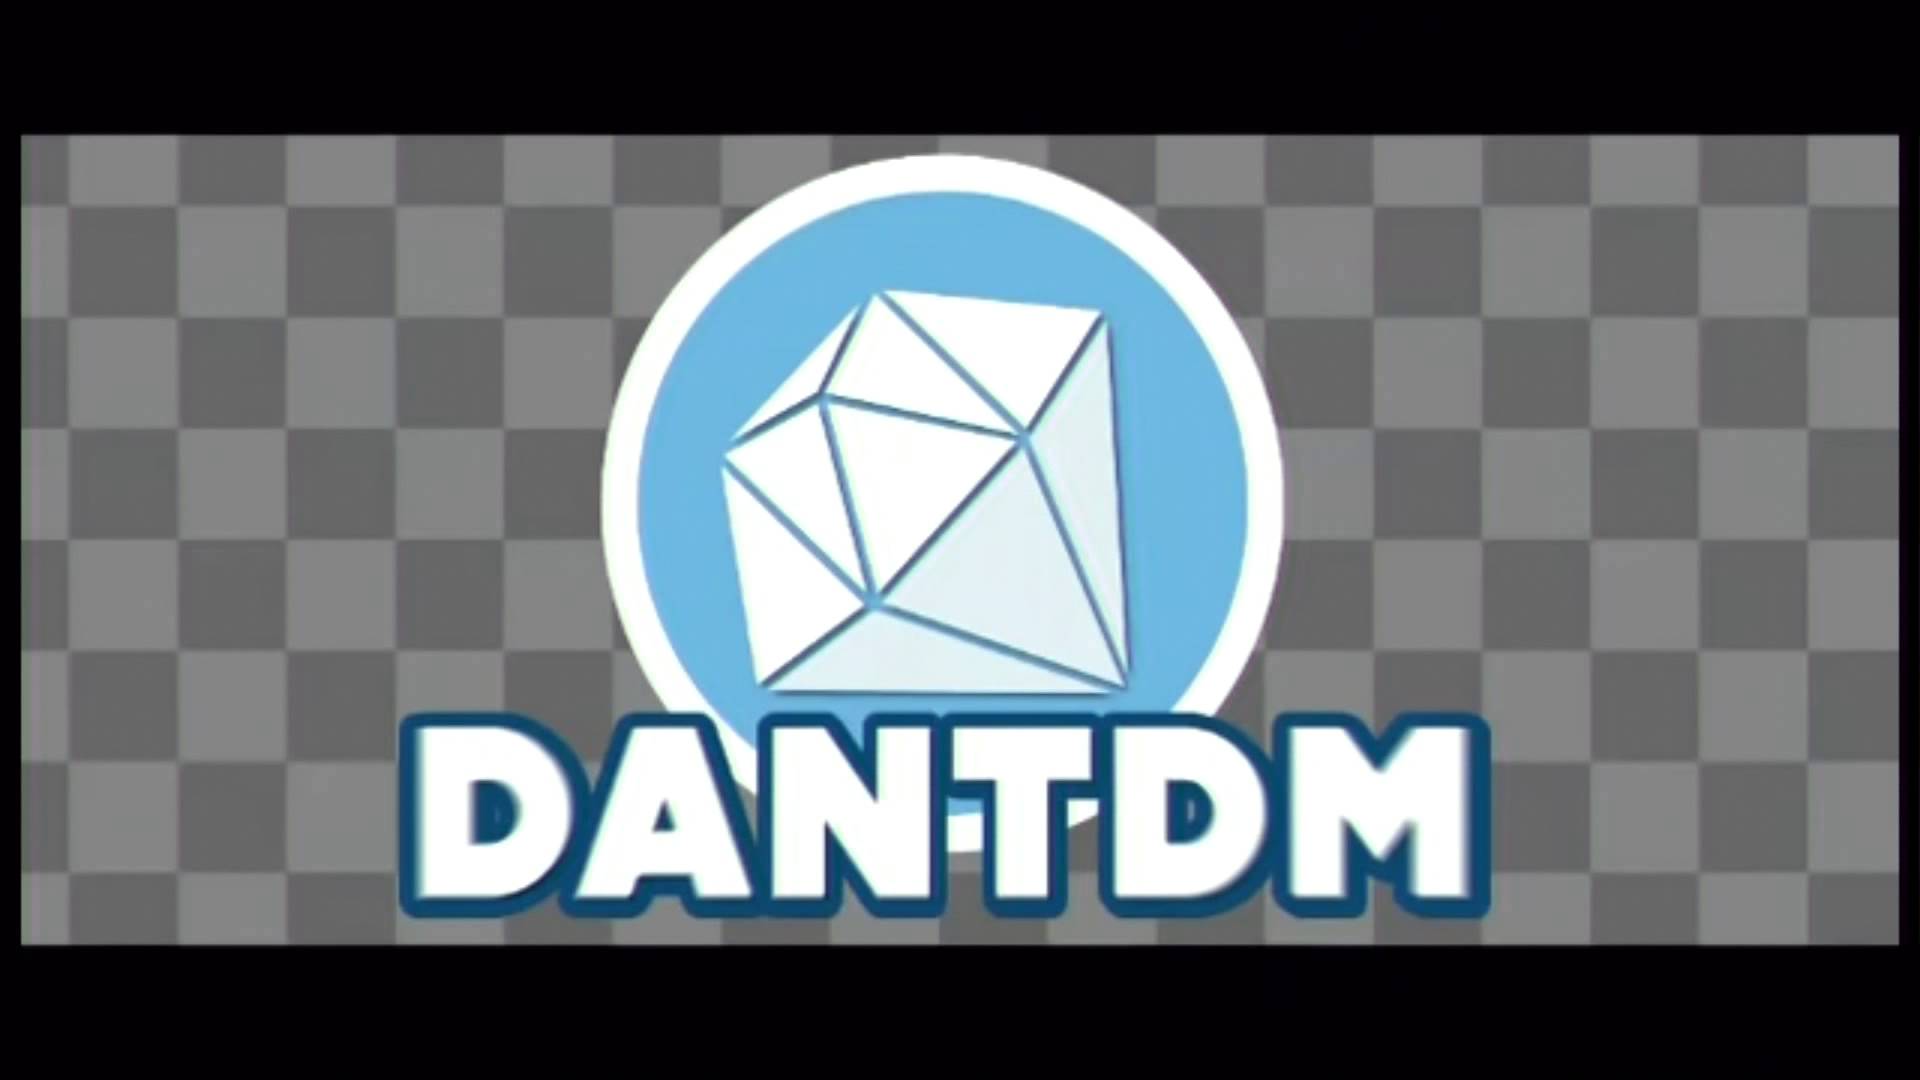 Dantdm Logos - new roblox logo dantdm